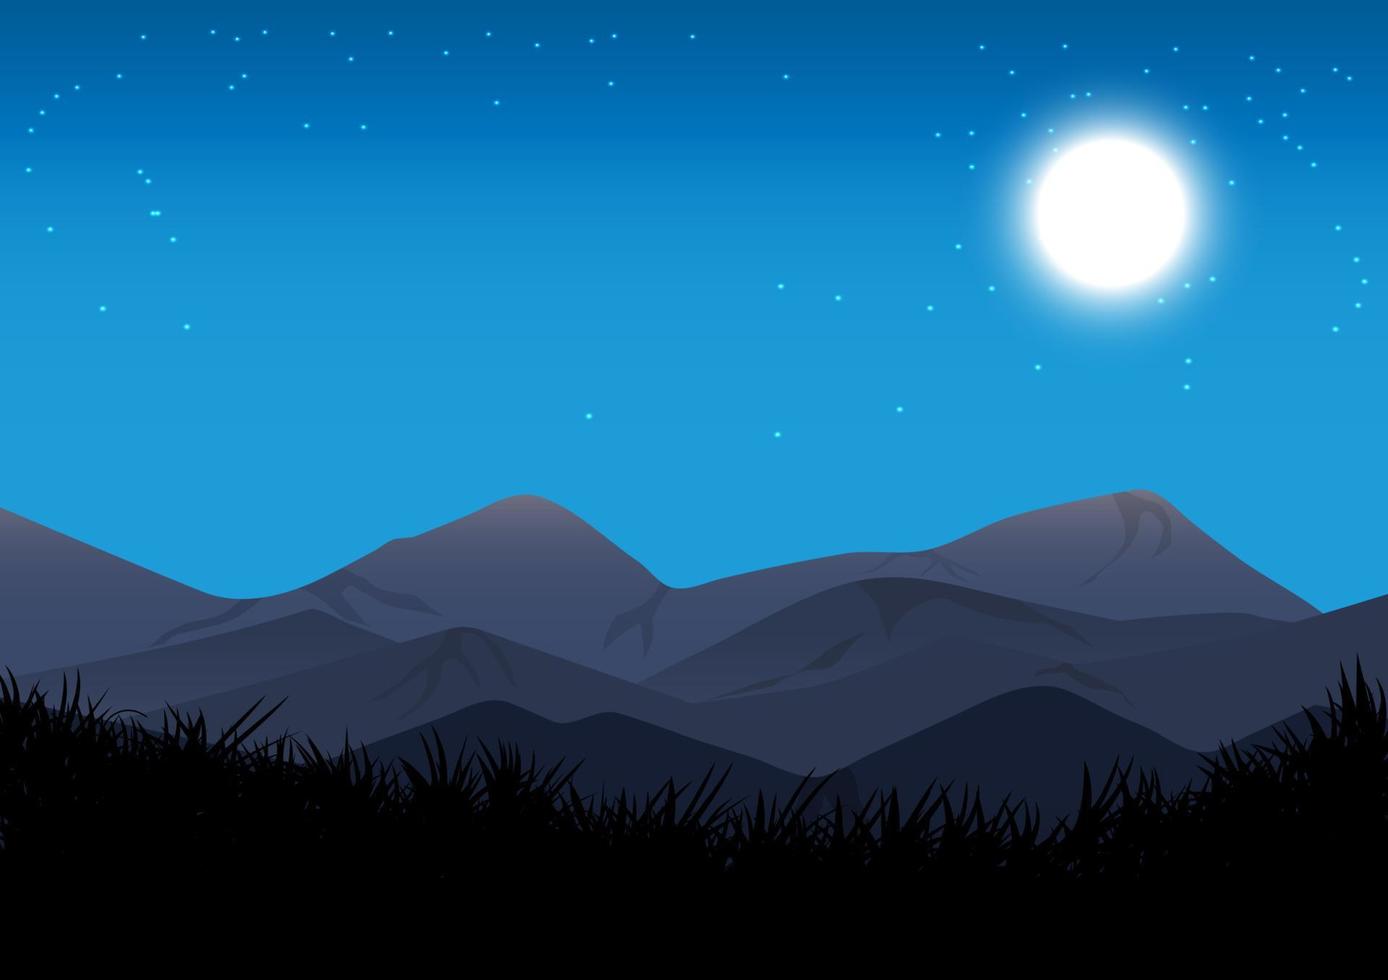 landskapsvy berg och måne på himlen på natten grafisk design vektorillustration vektor